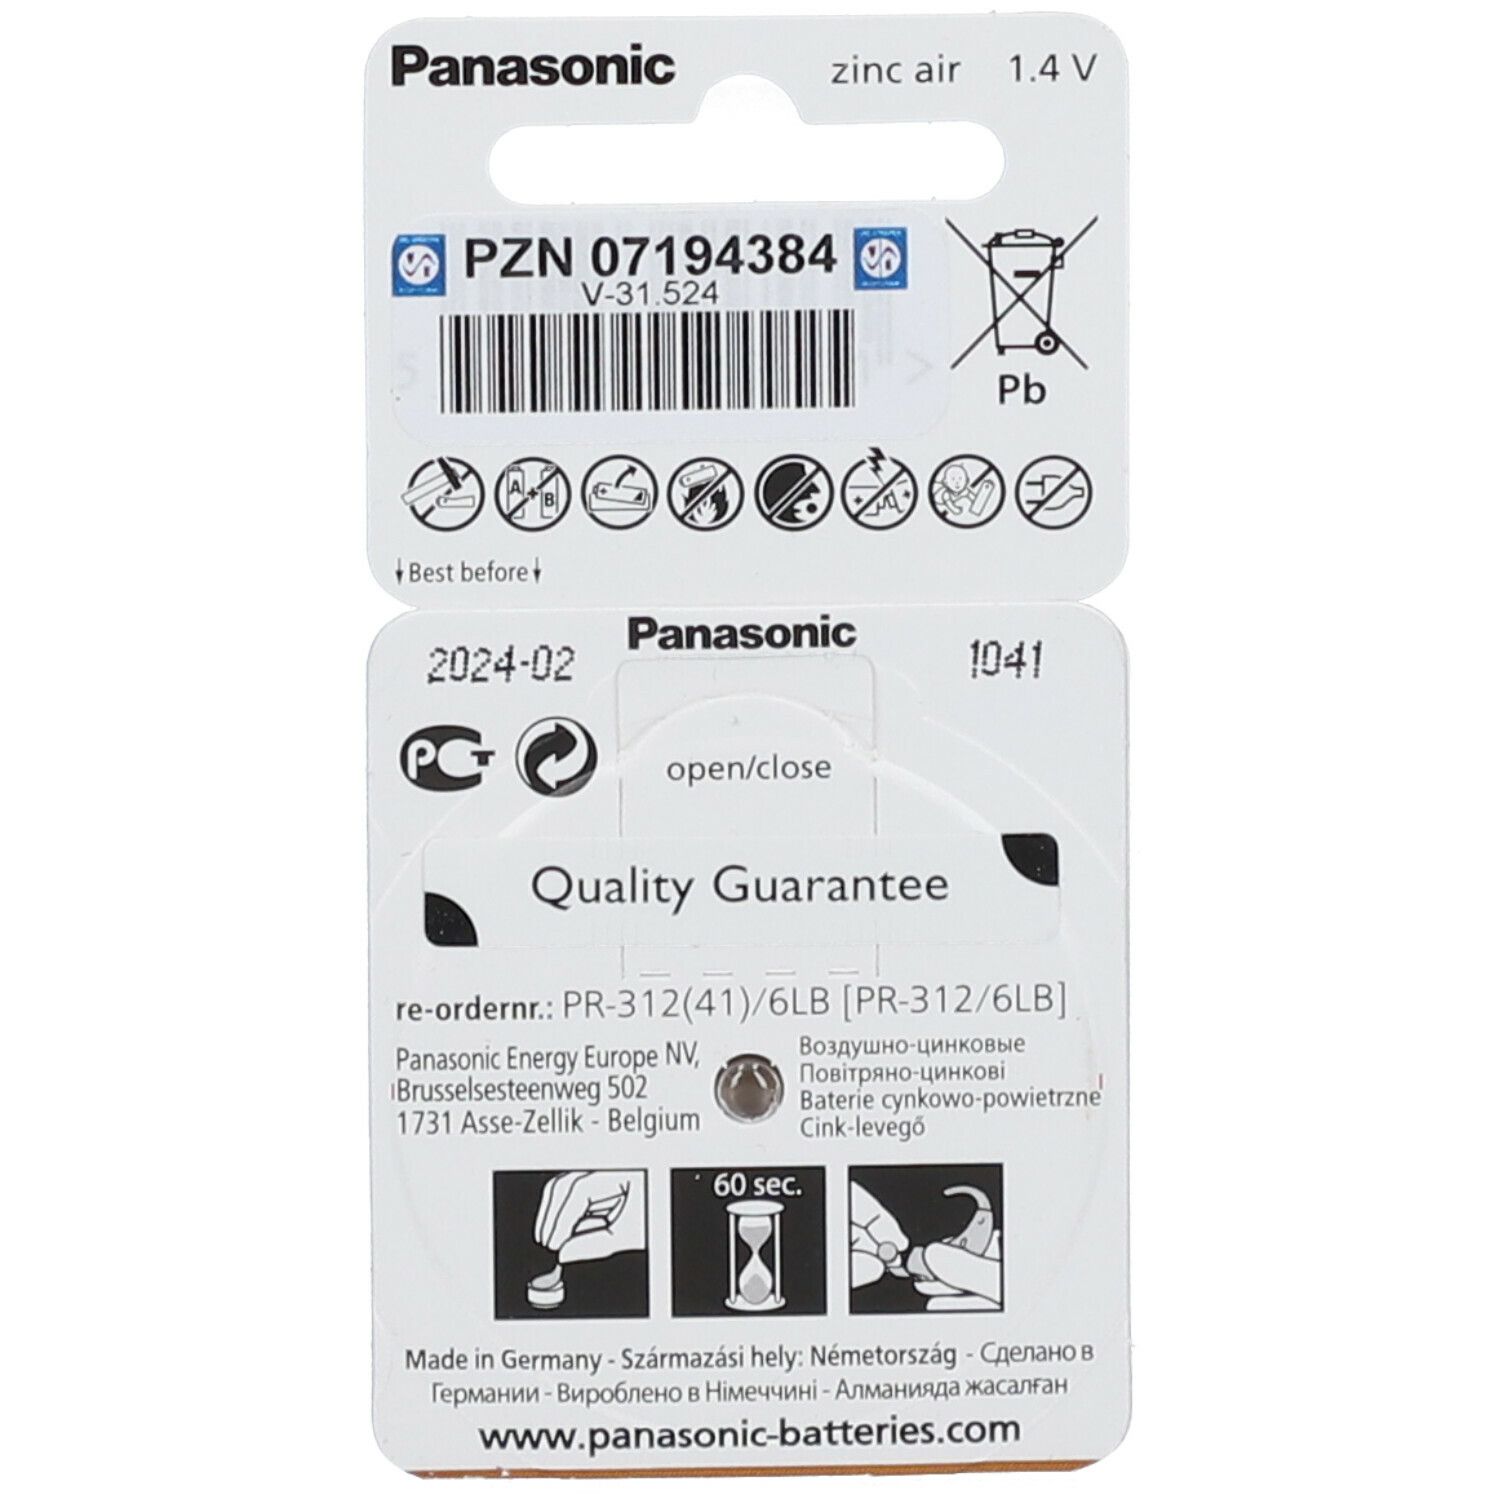 Panasonic® PAn PR 312 Batterien für Hörgeräte